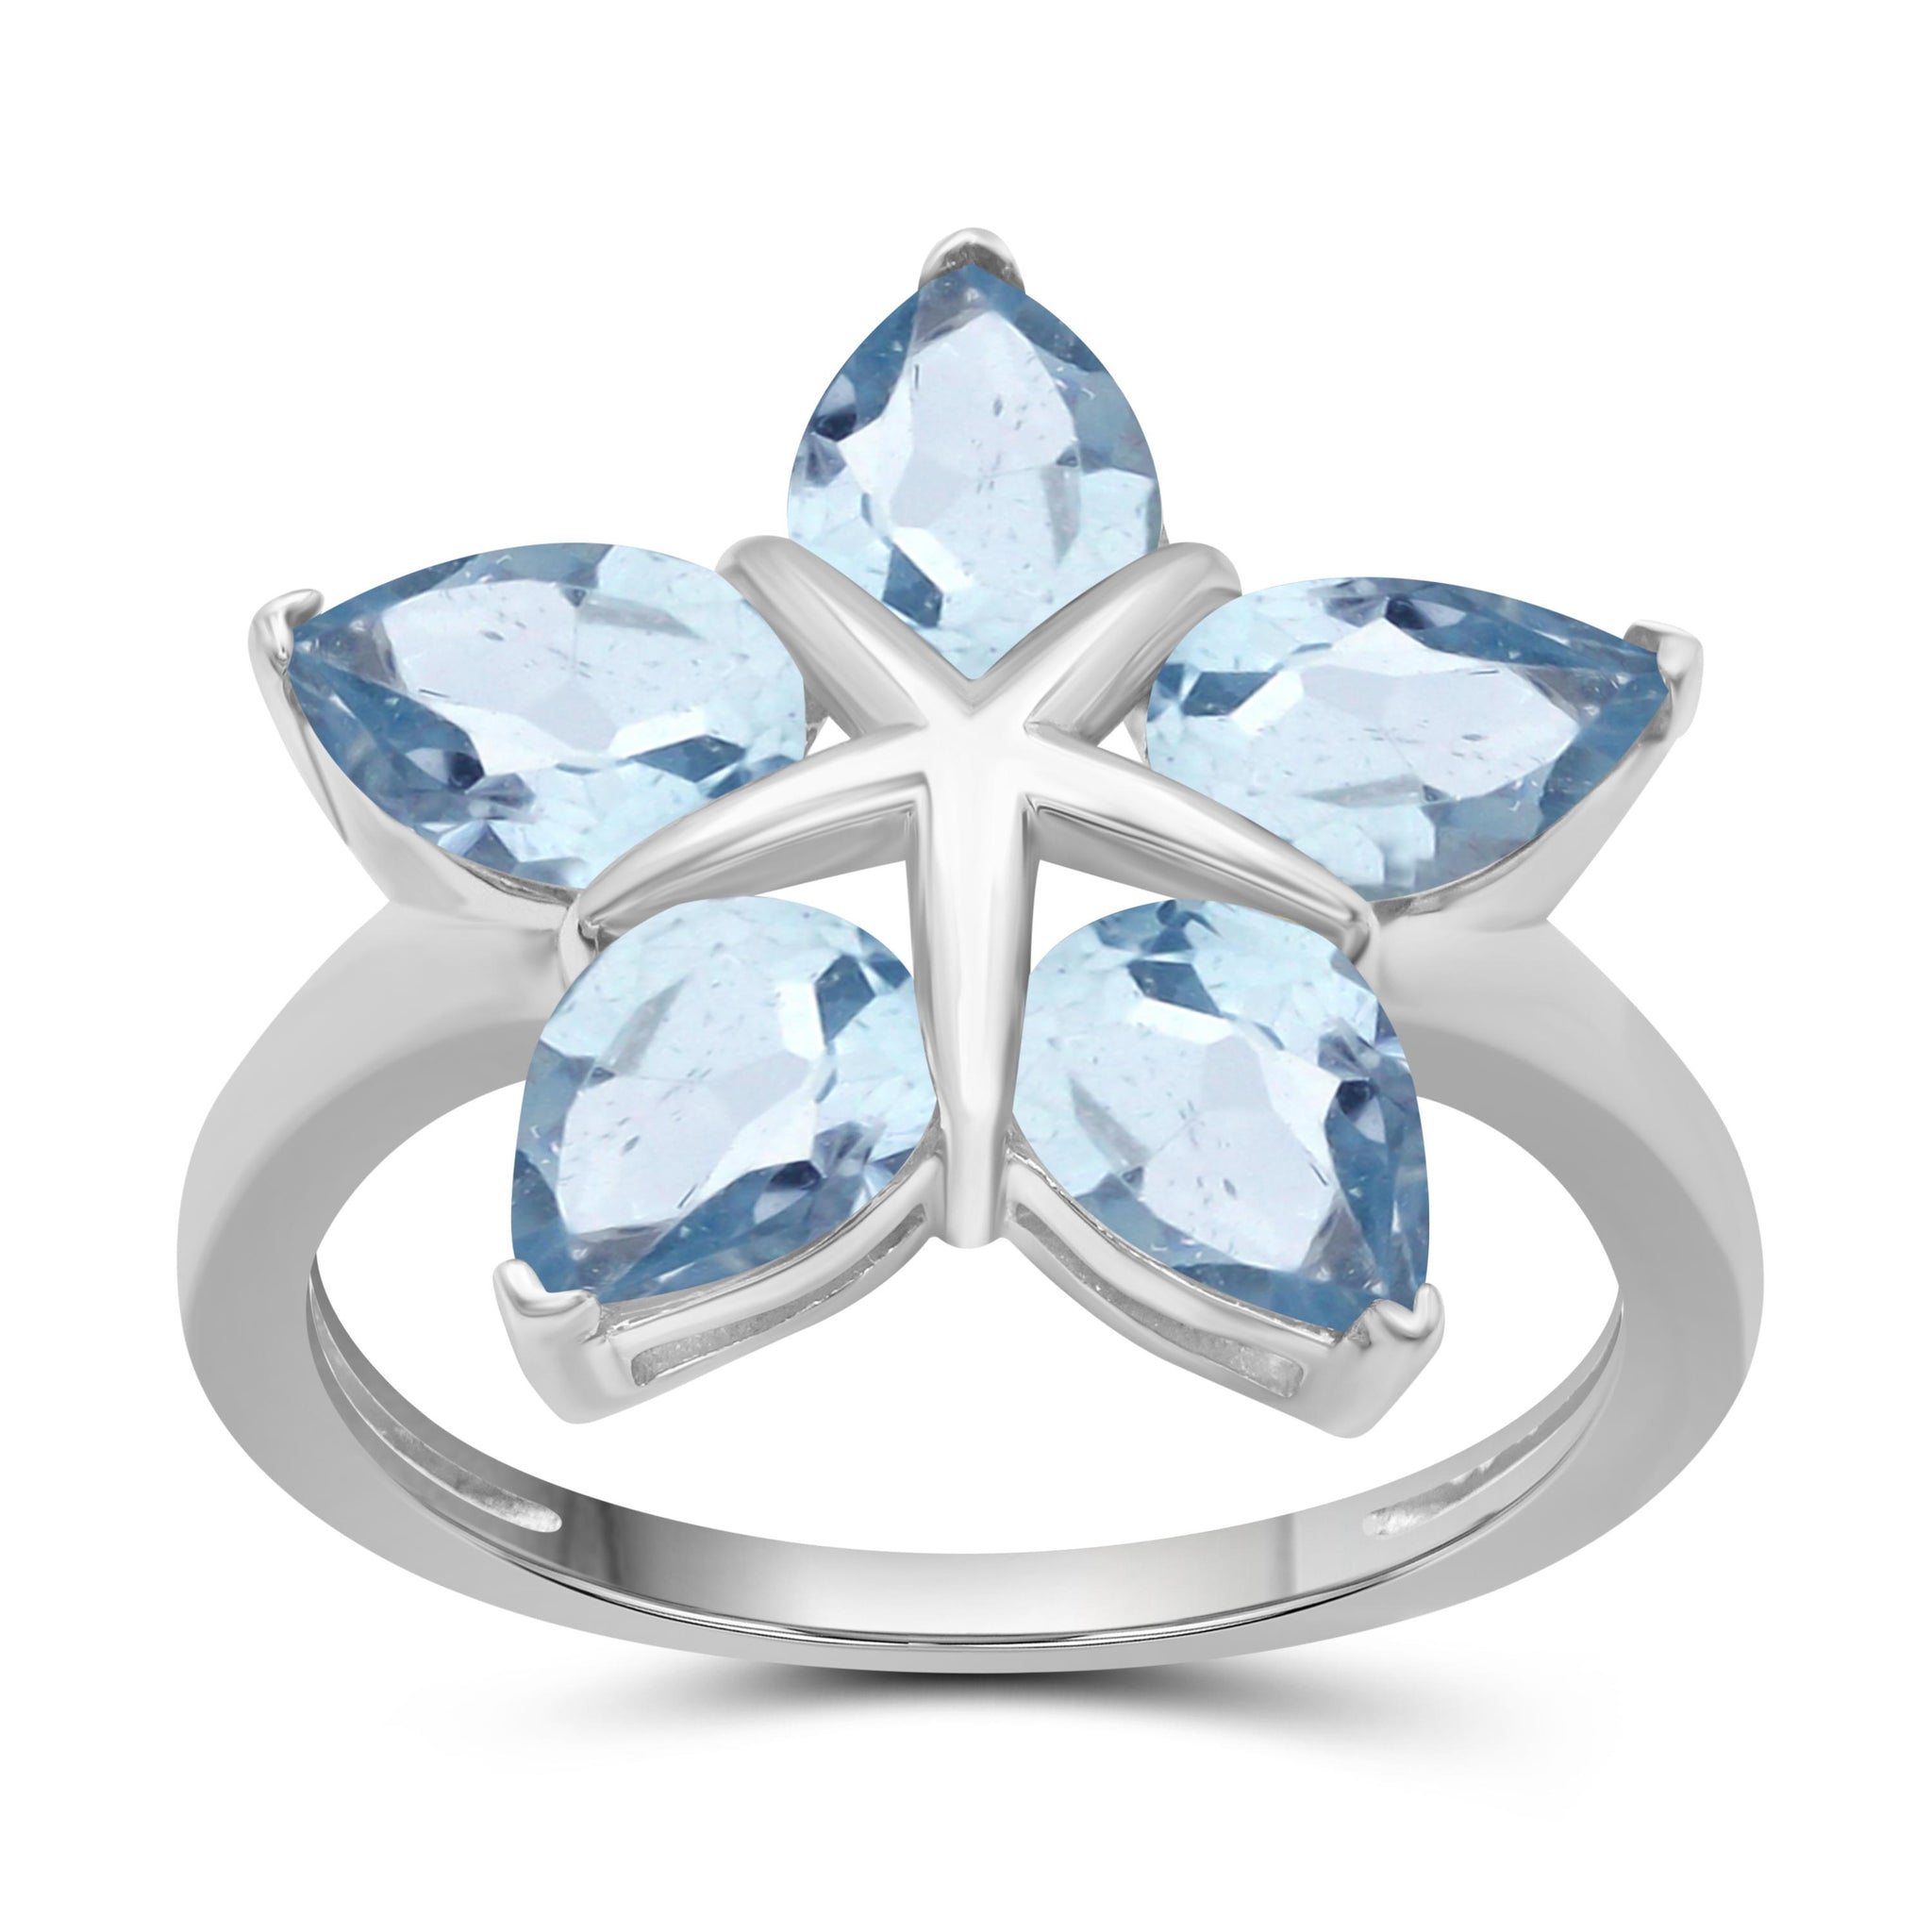 4 1/4 Carat T.G.W. Sky Blue Topaz Gemstone Sterling Silver Flower Ring